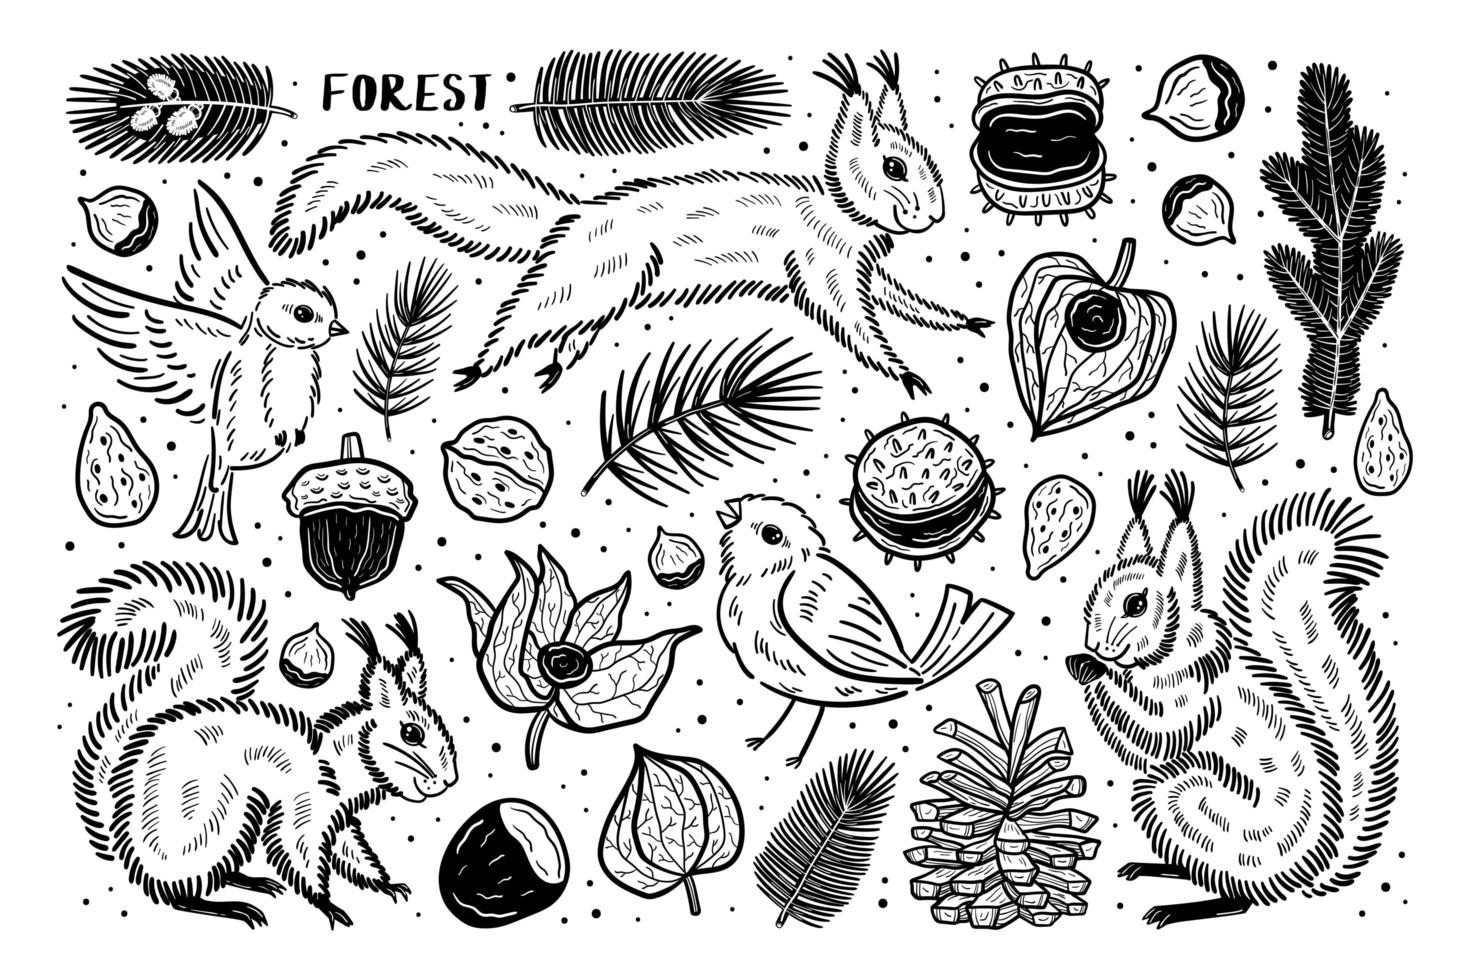 Forest set of elements clip art. Animals nature plants. Squirrel bird pine nut chestnut branch seed physalis winter cherry. vector